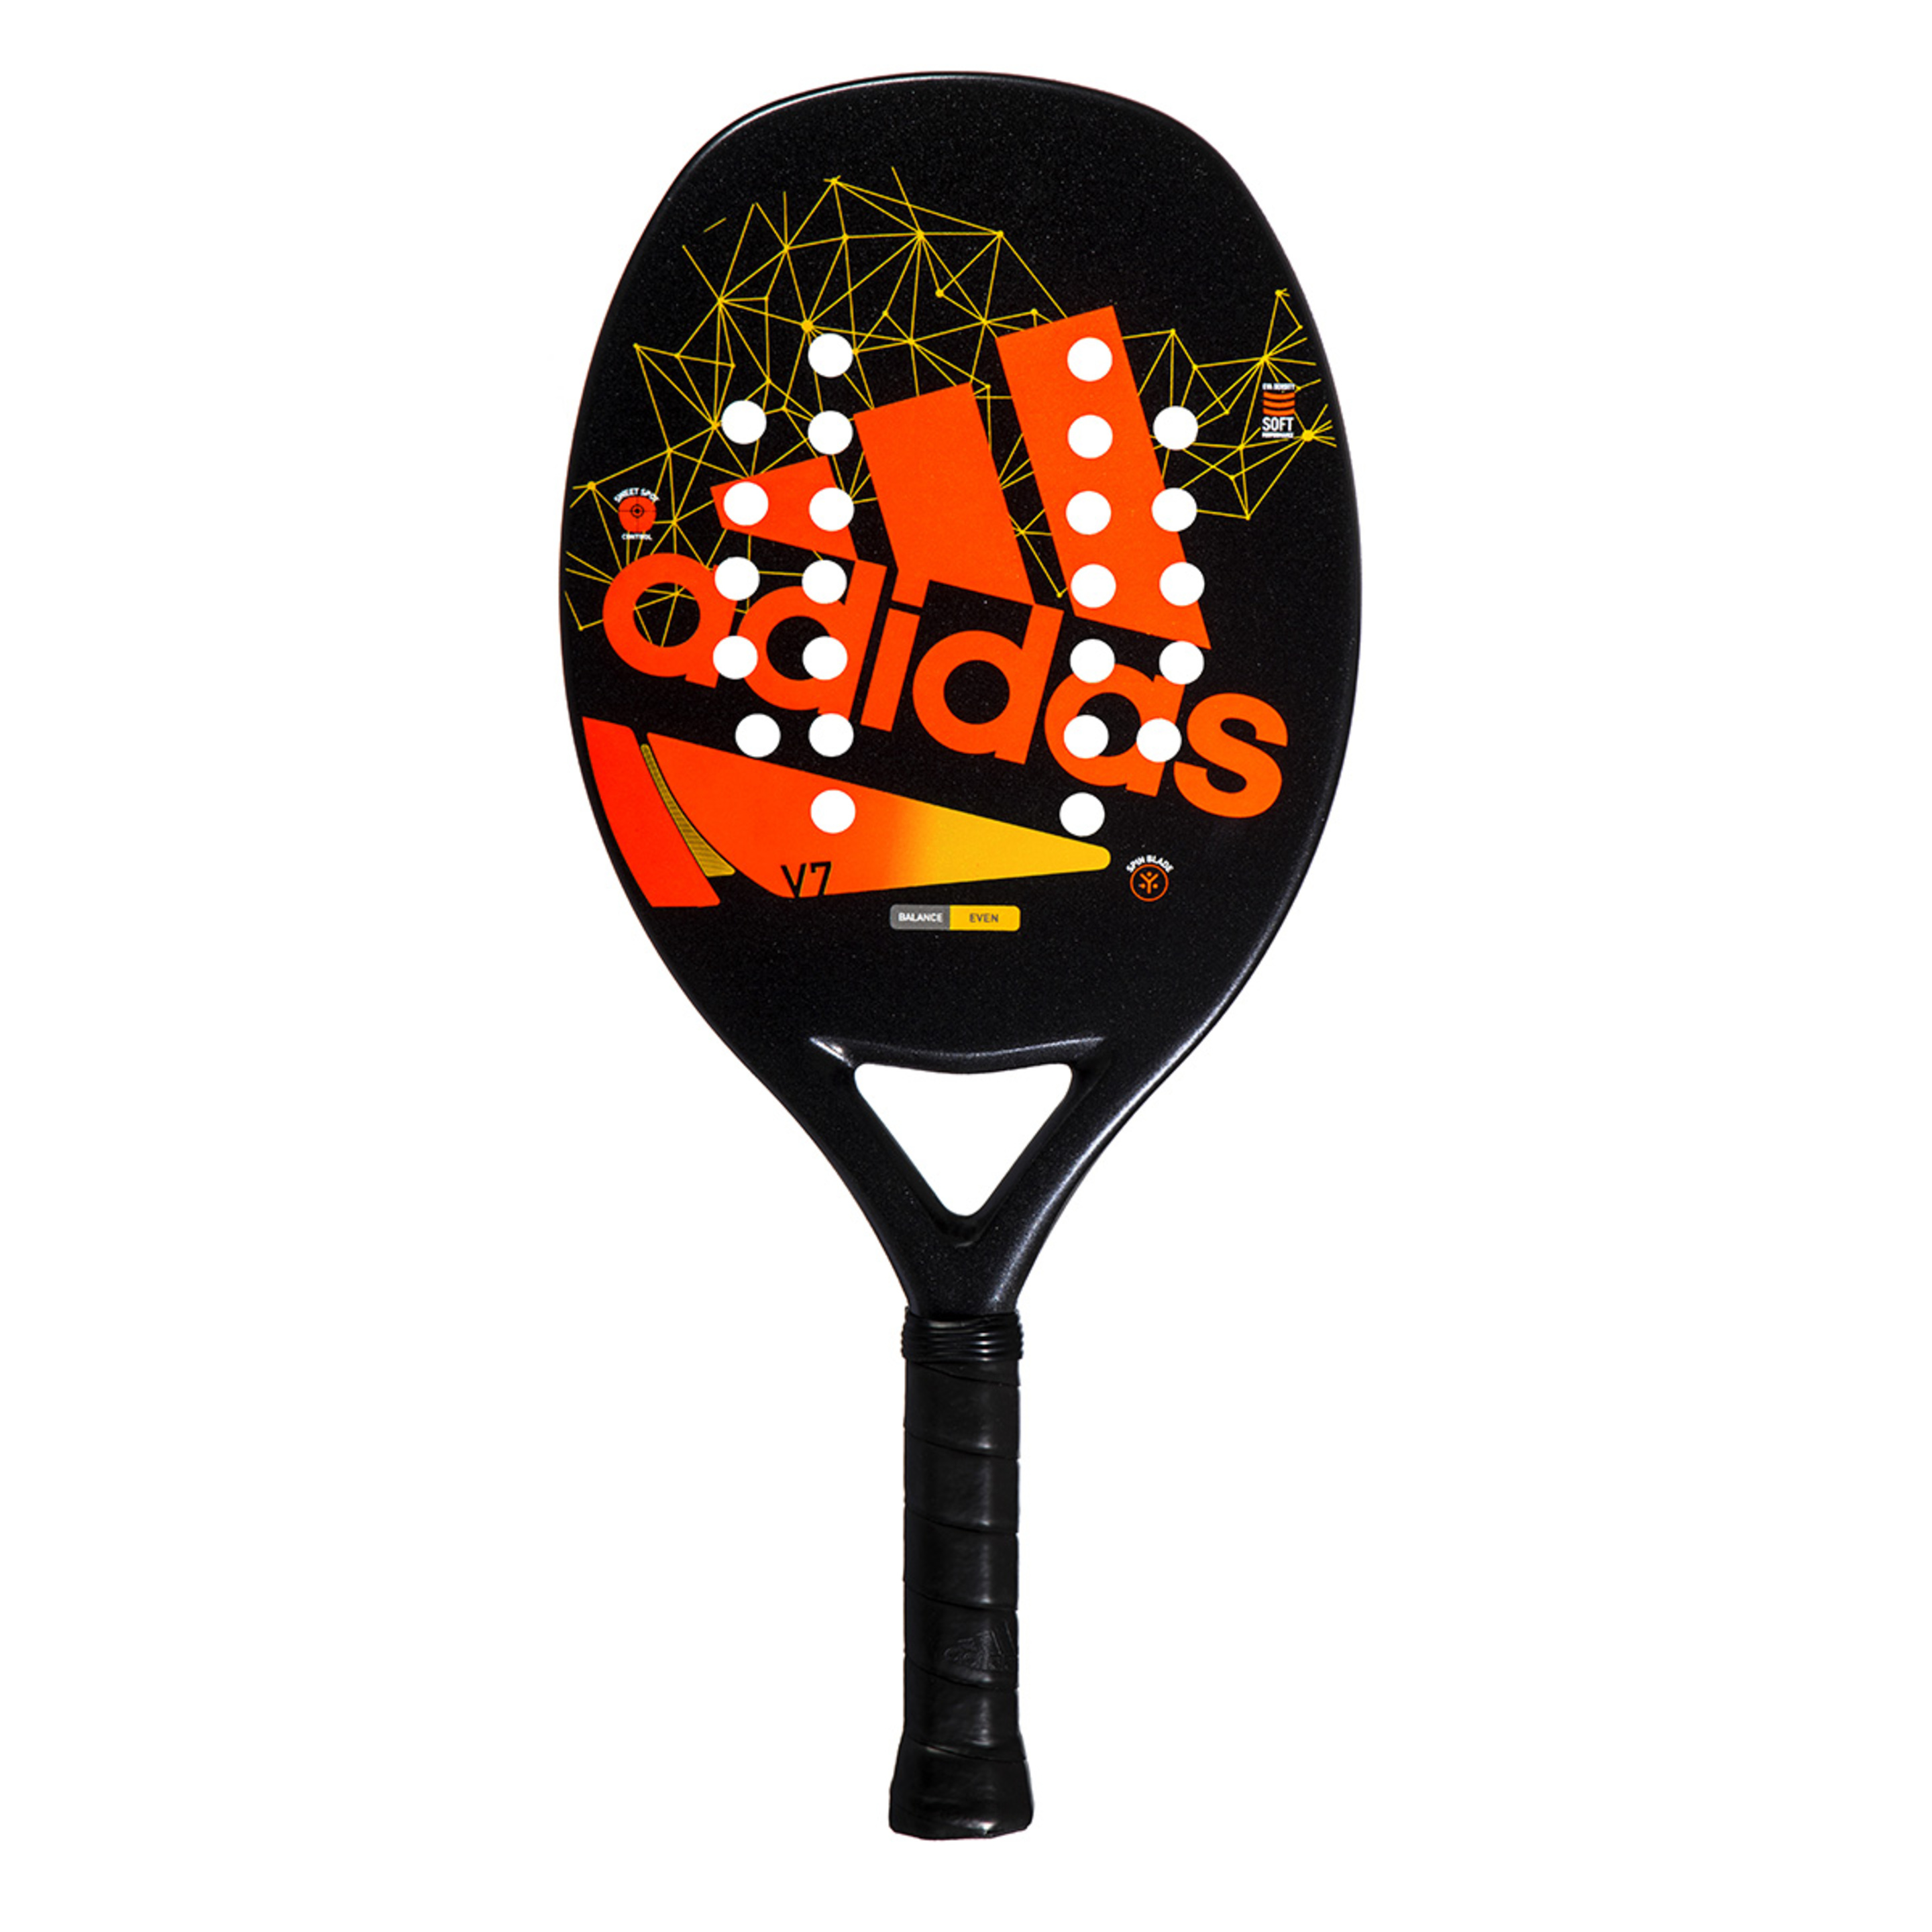 Pala Tenis Playa adidas Bt V7 Orange